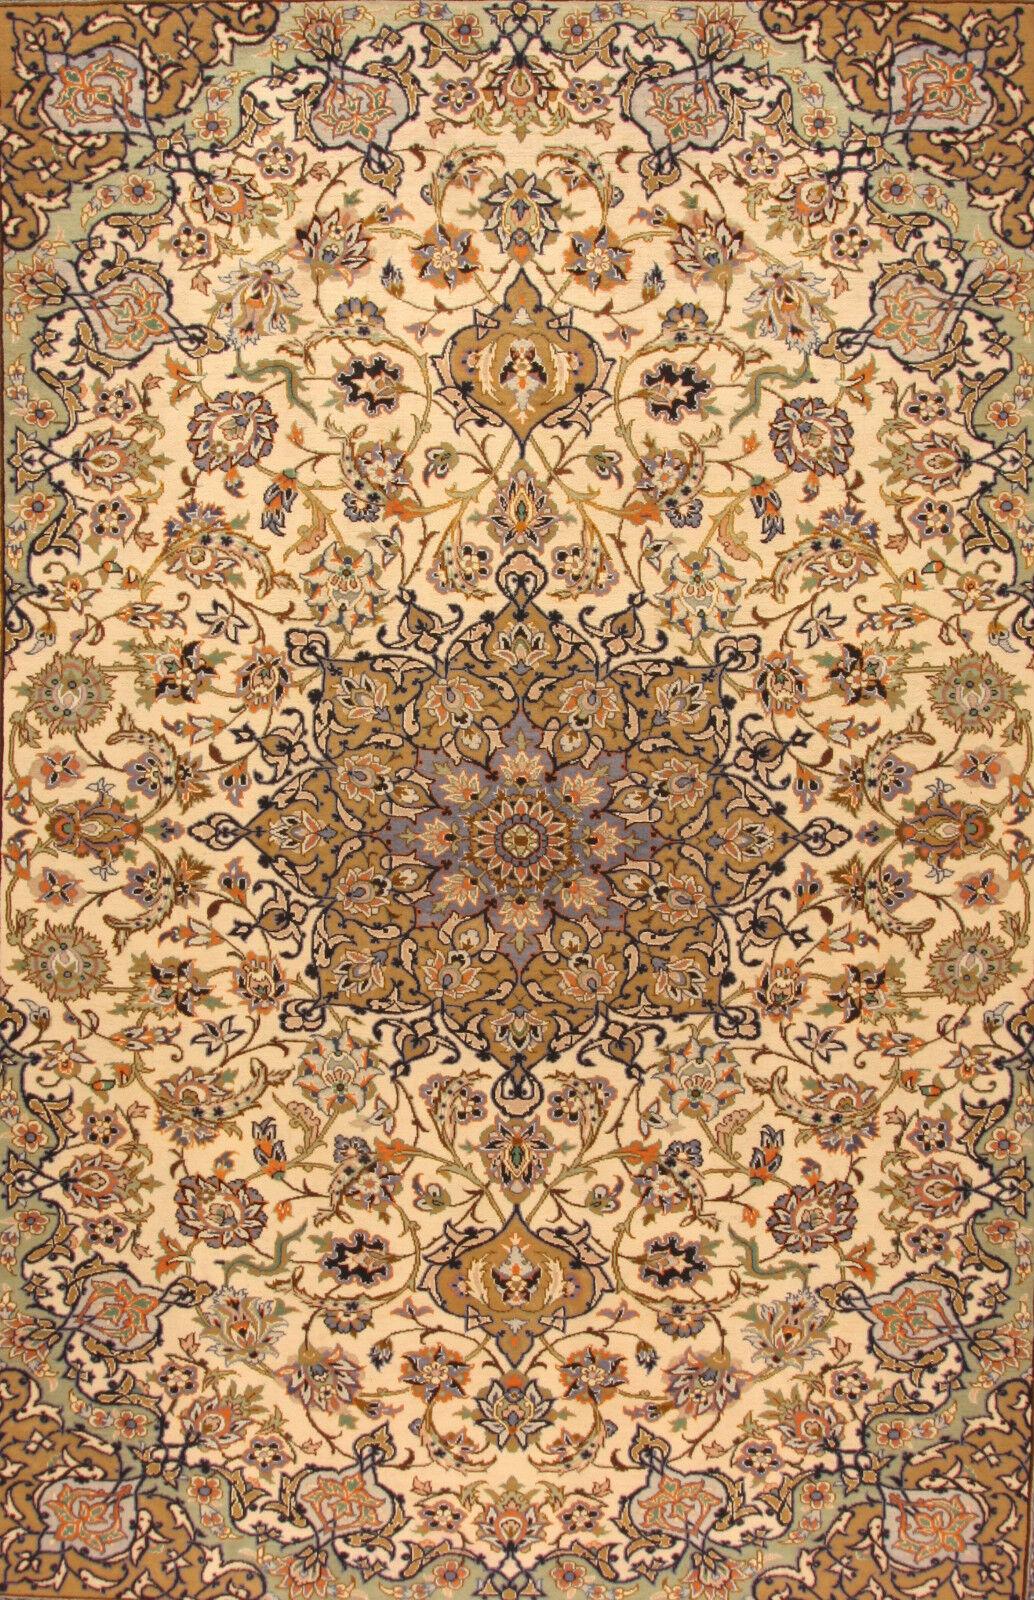 Handmade Contemporary Isfahan Rug 9.6' x 12.7' (295cm x 390cm), 2000s - 1T02 For Sale 1